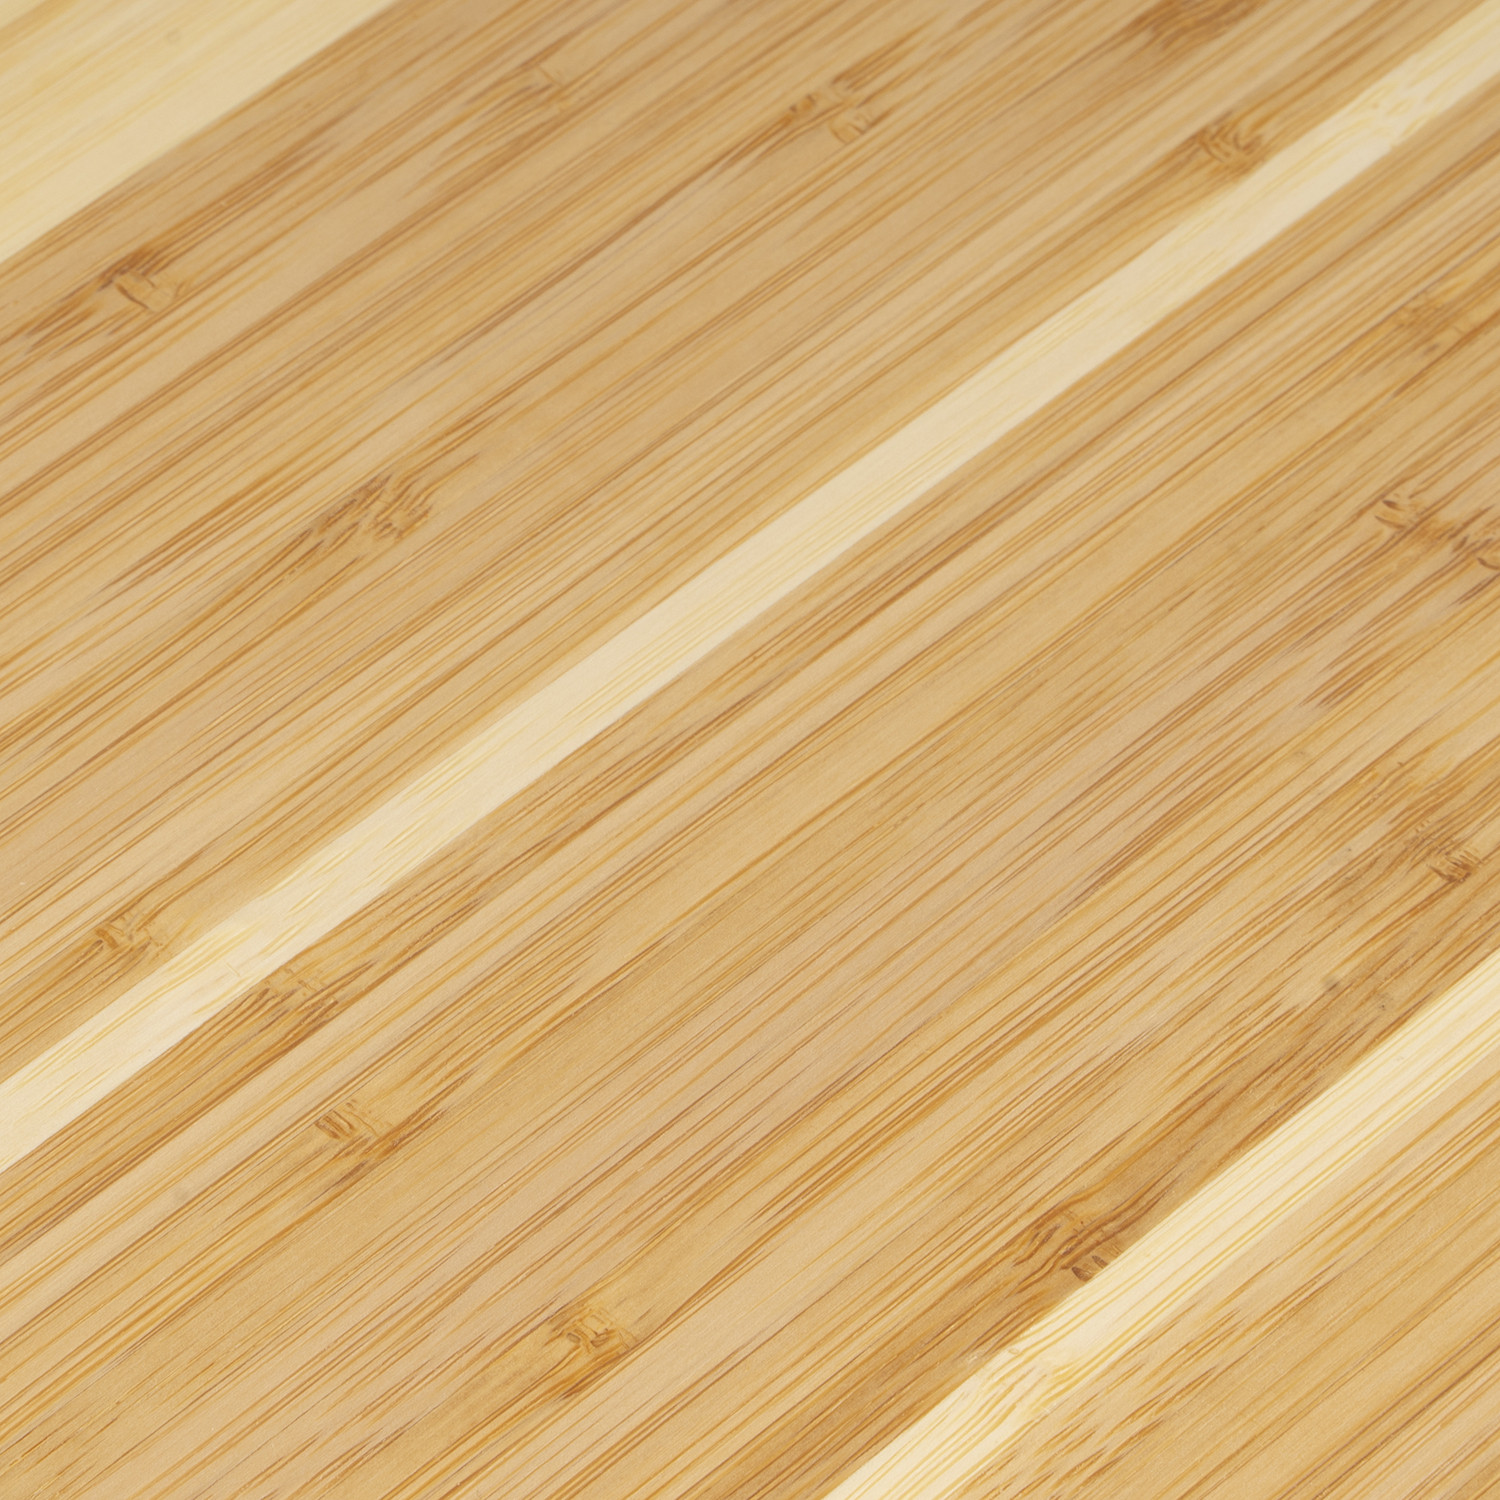 Bamboo Chopping Board with Thumb Hole Image 4